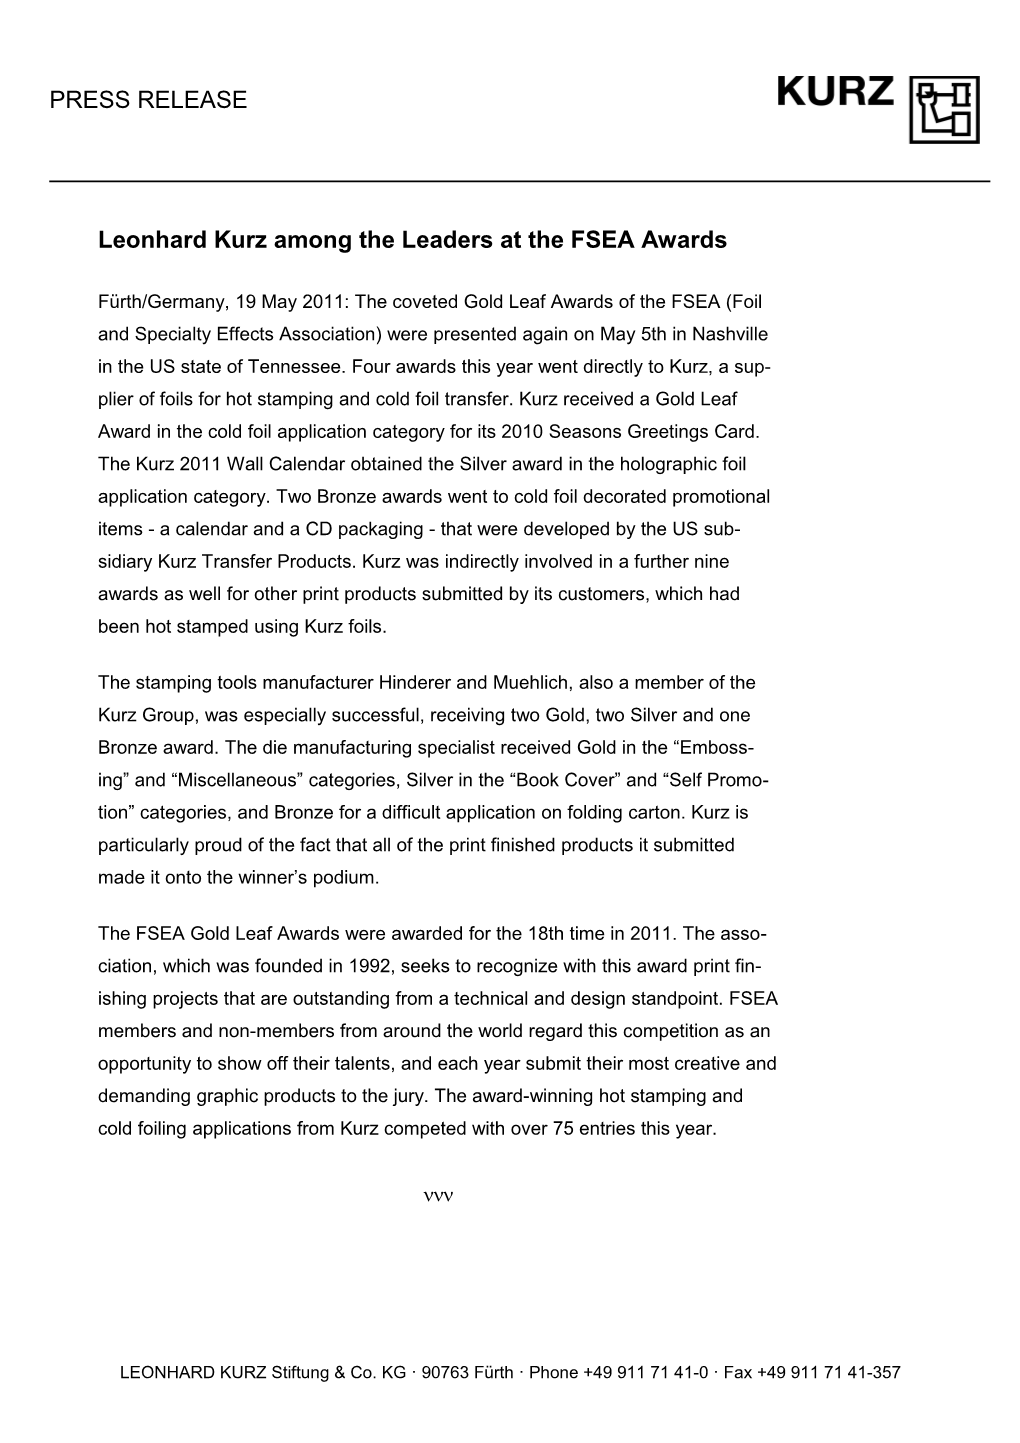 Leonhard Kurz Among the Leaders at the FSEA Awards